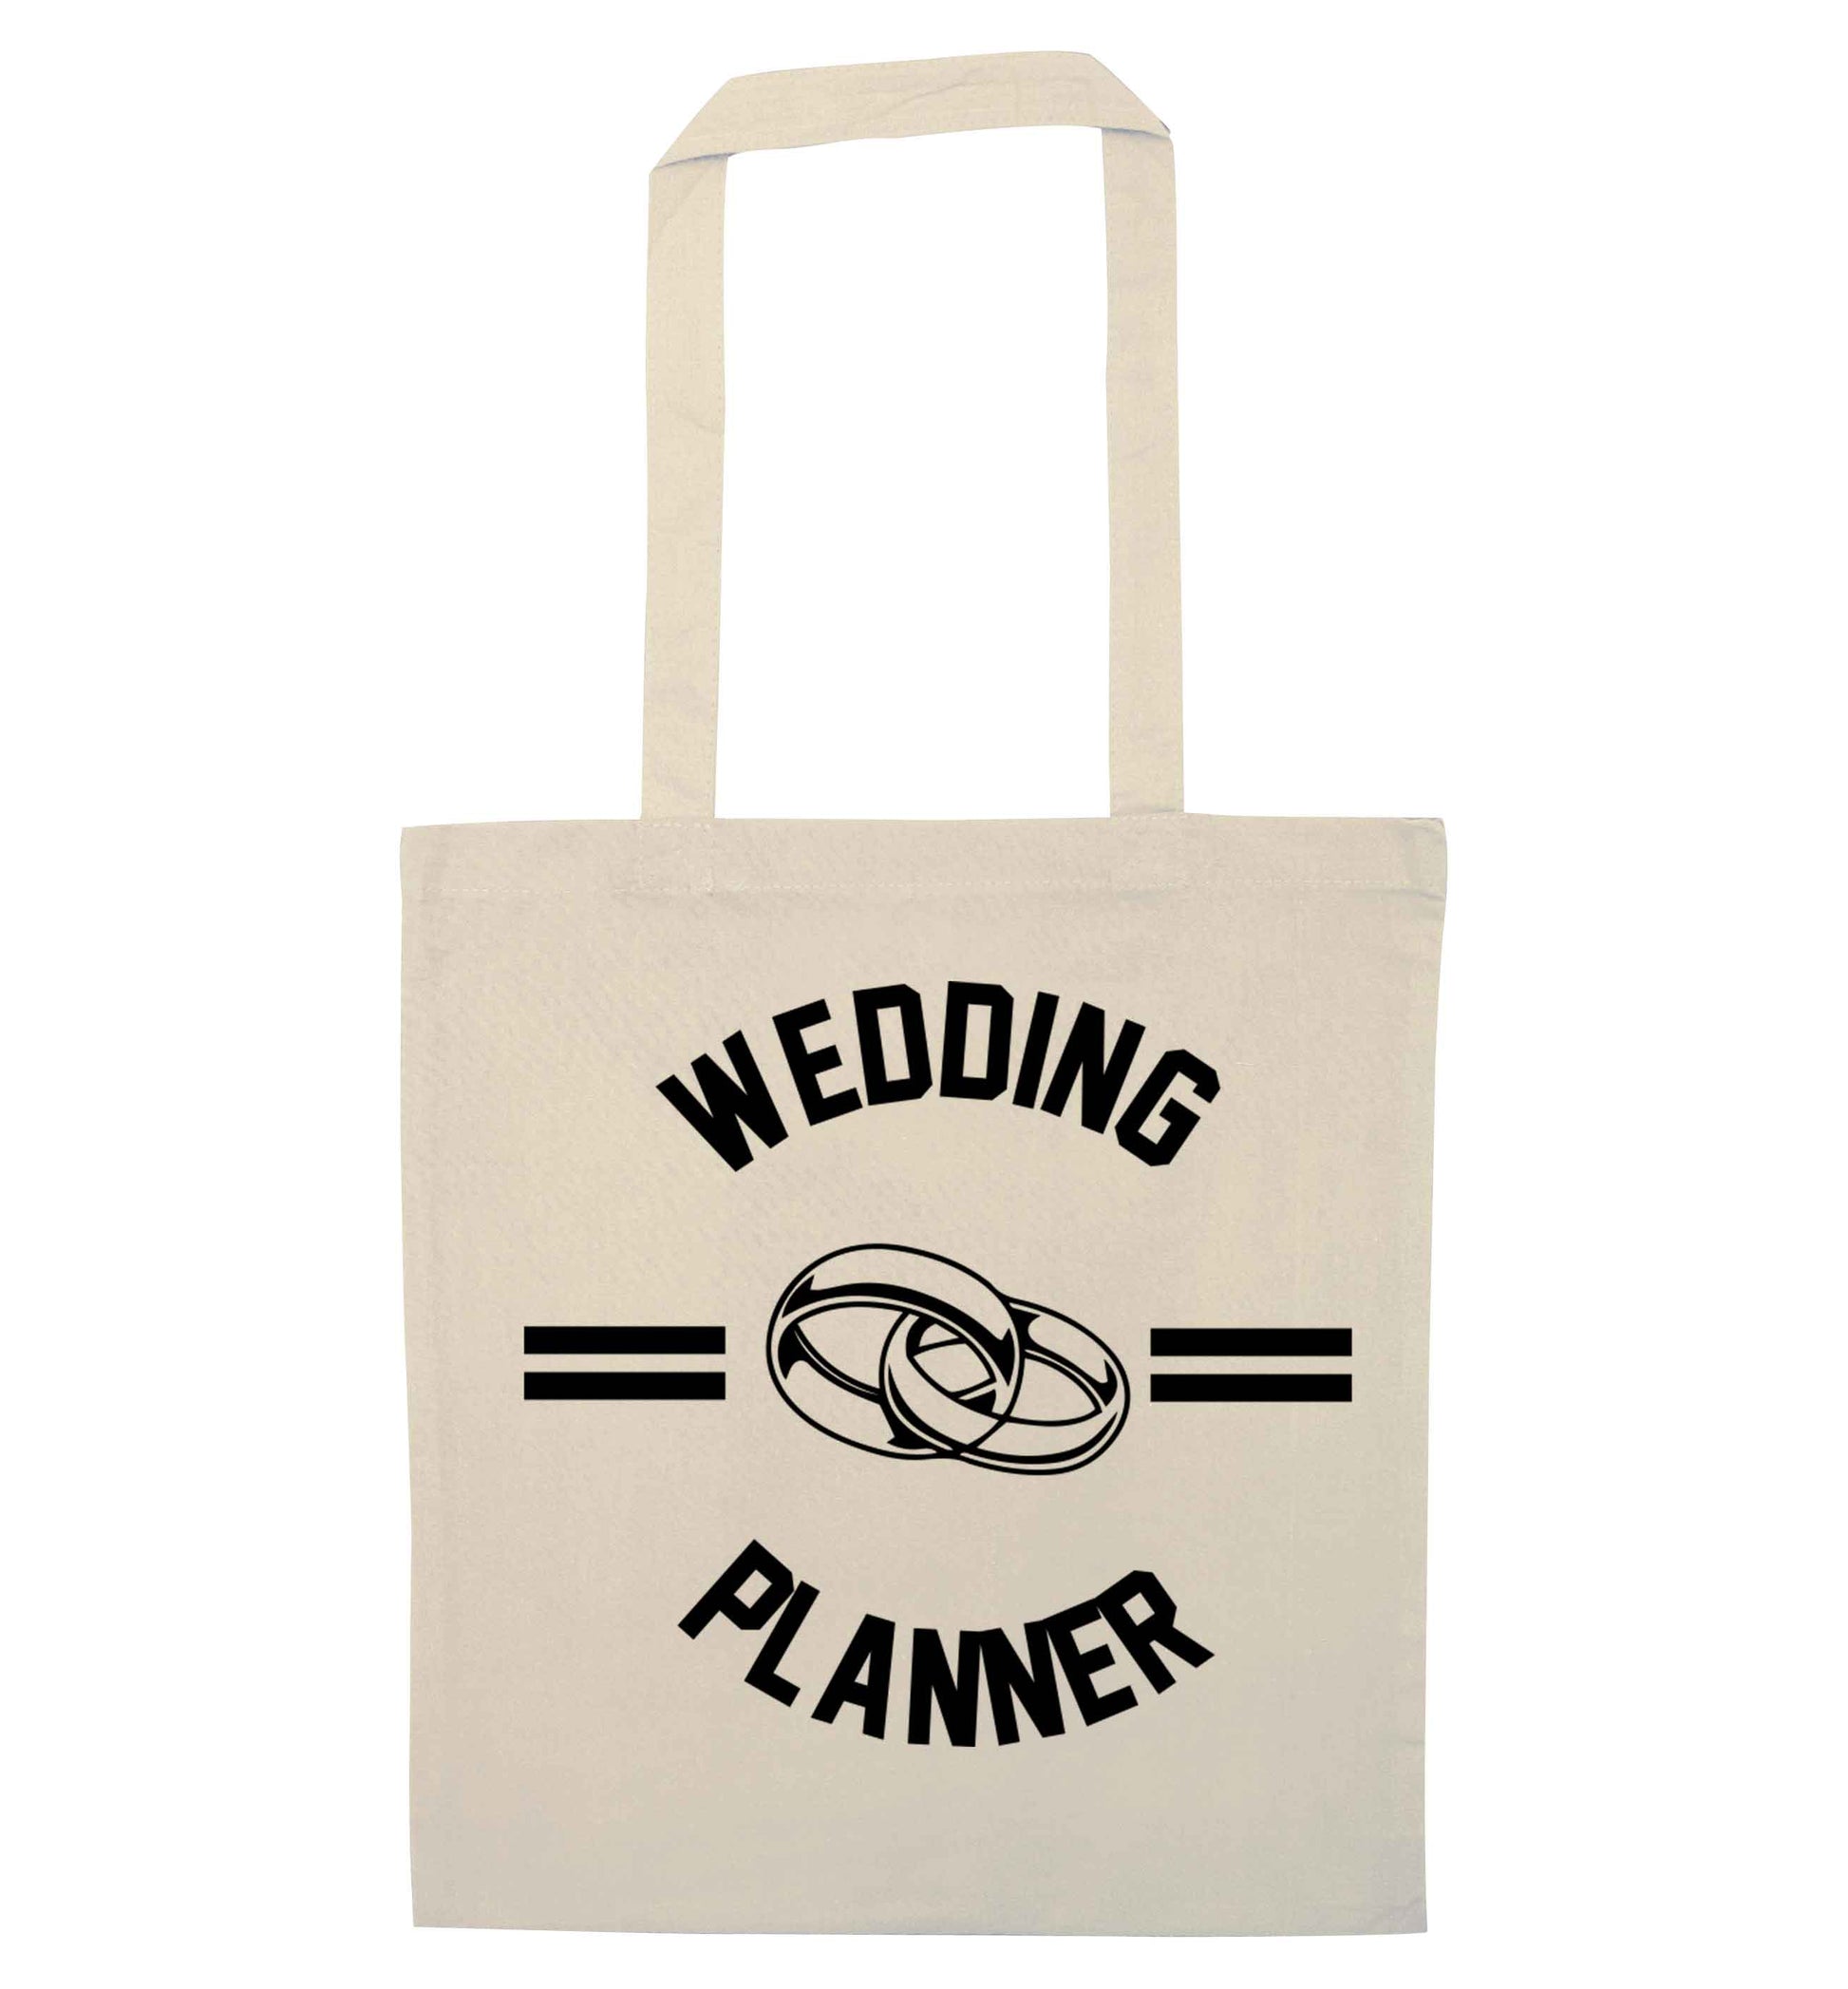 Wedding planner natural tote bag